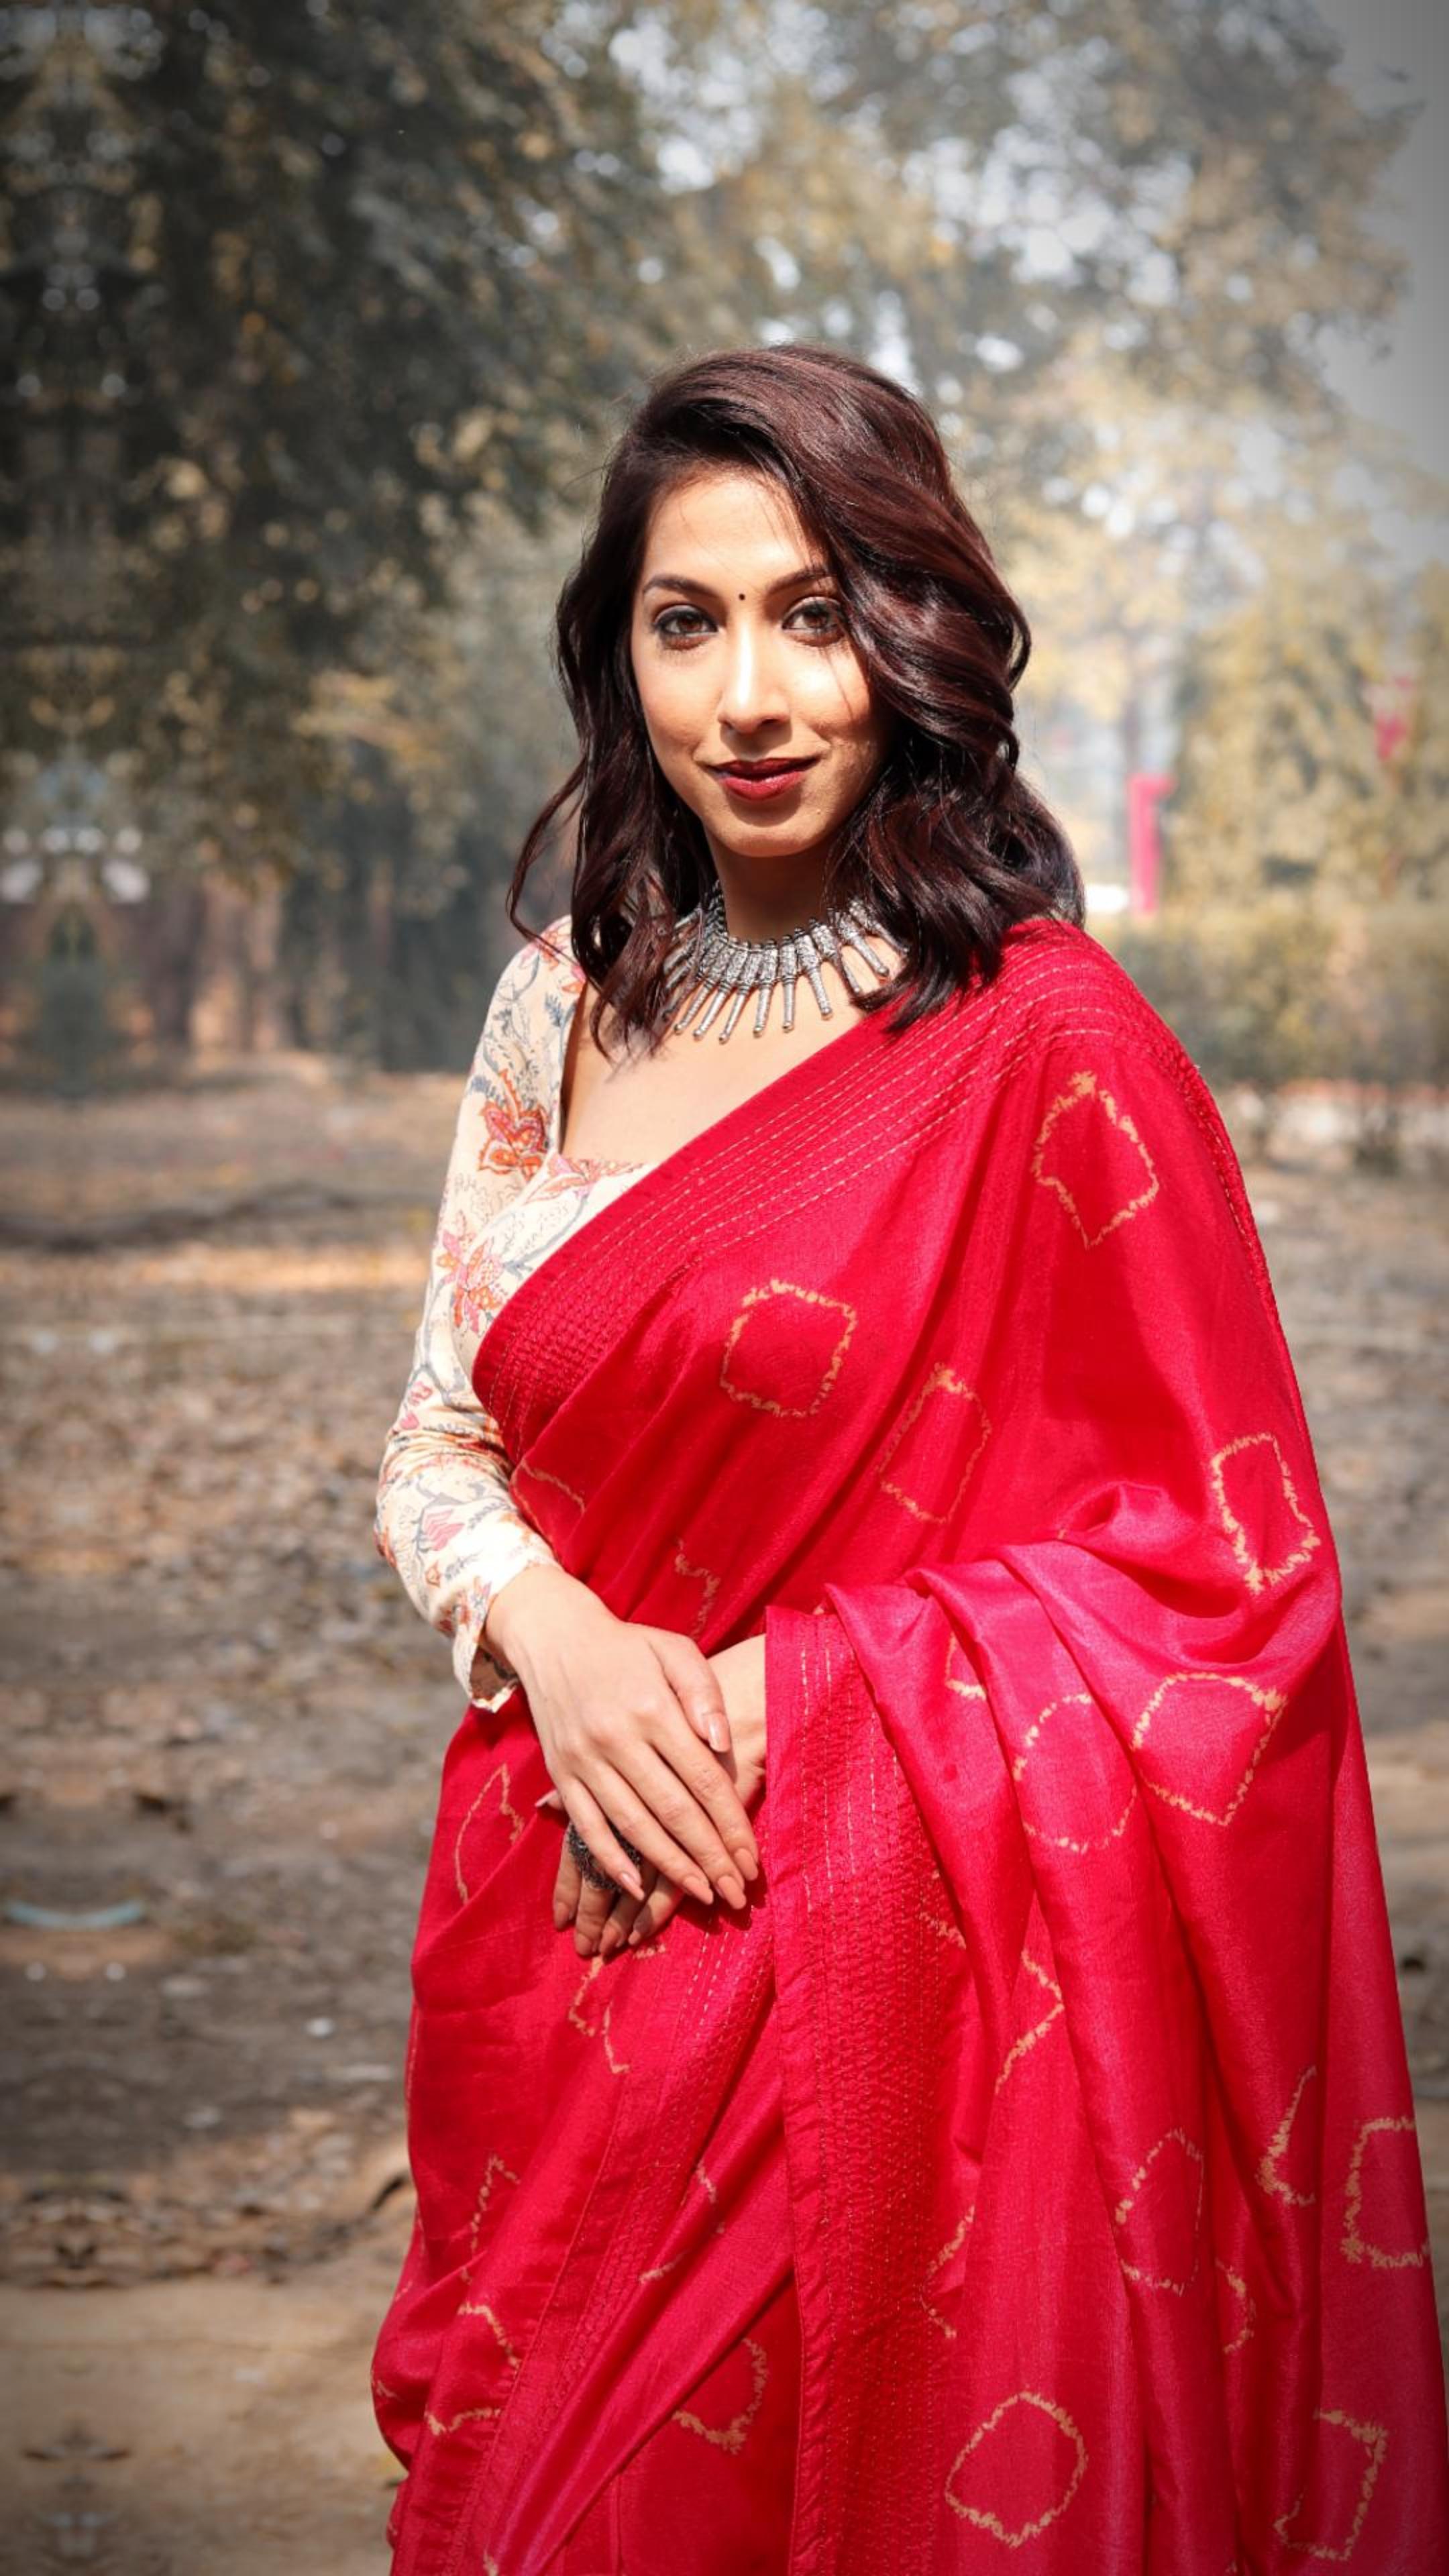 Banarasee Silk Blend Saree With Batik Print & Contrast Blouse-Red